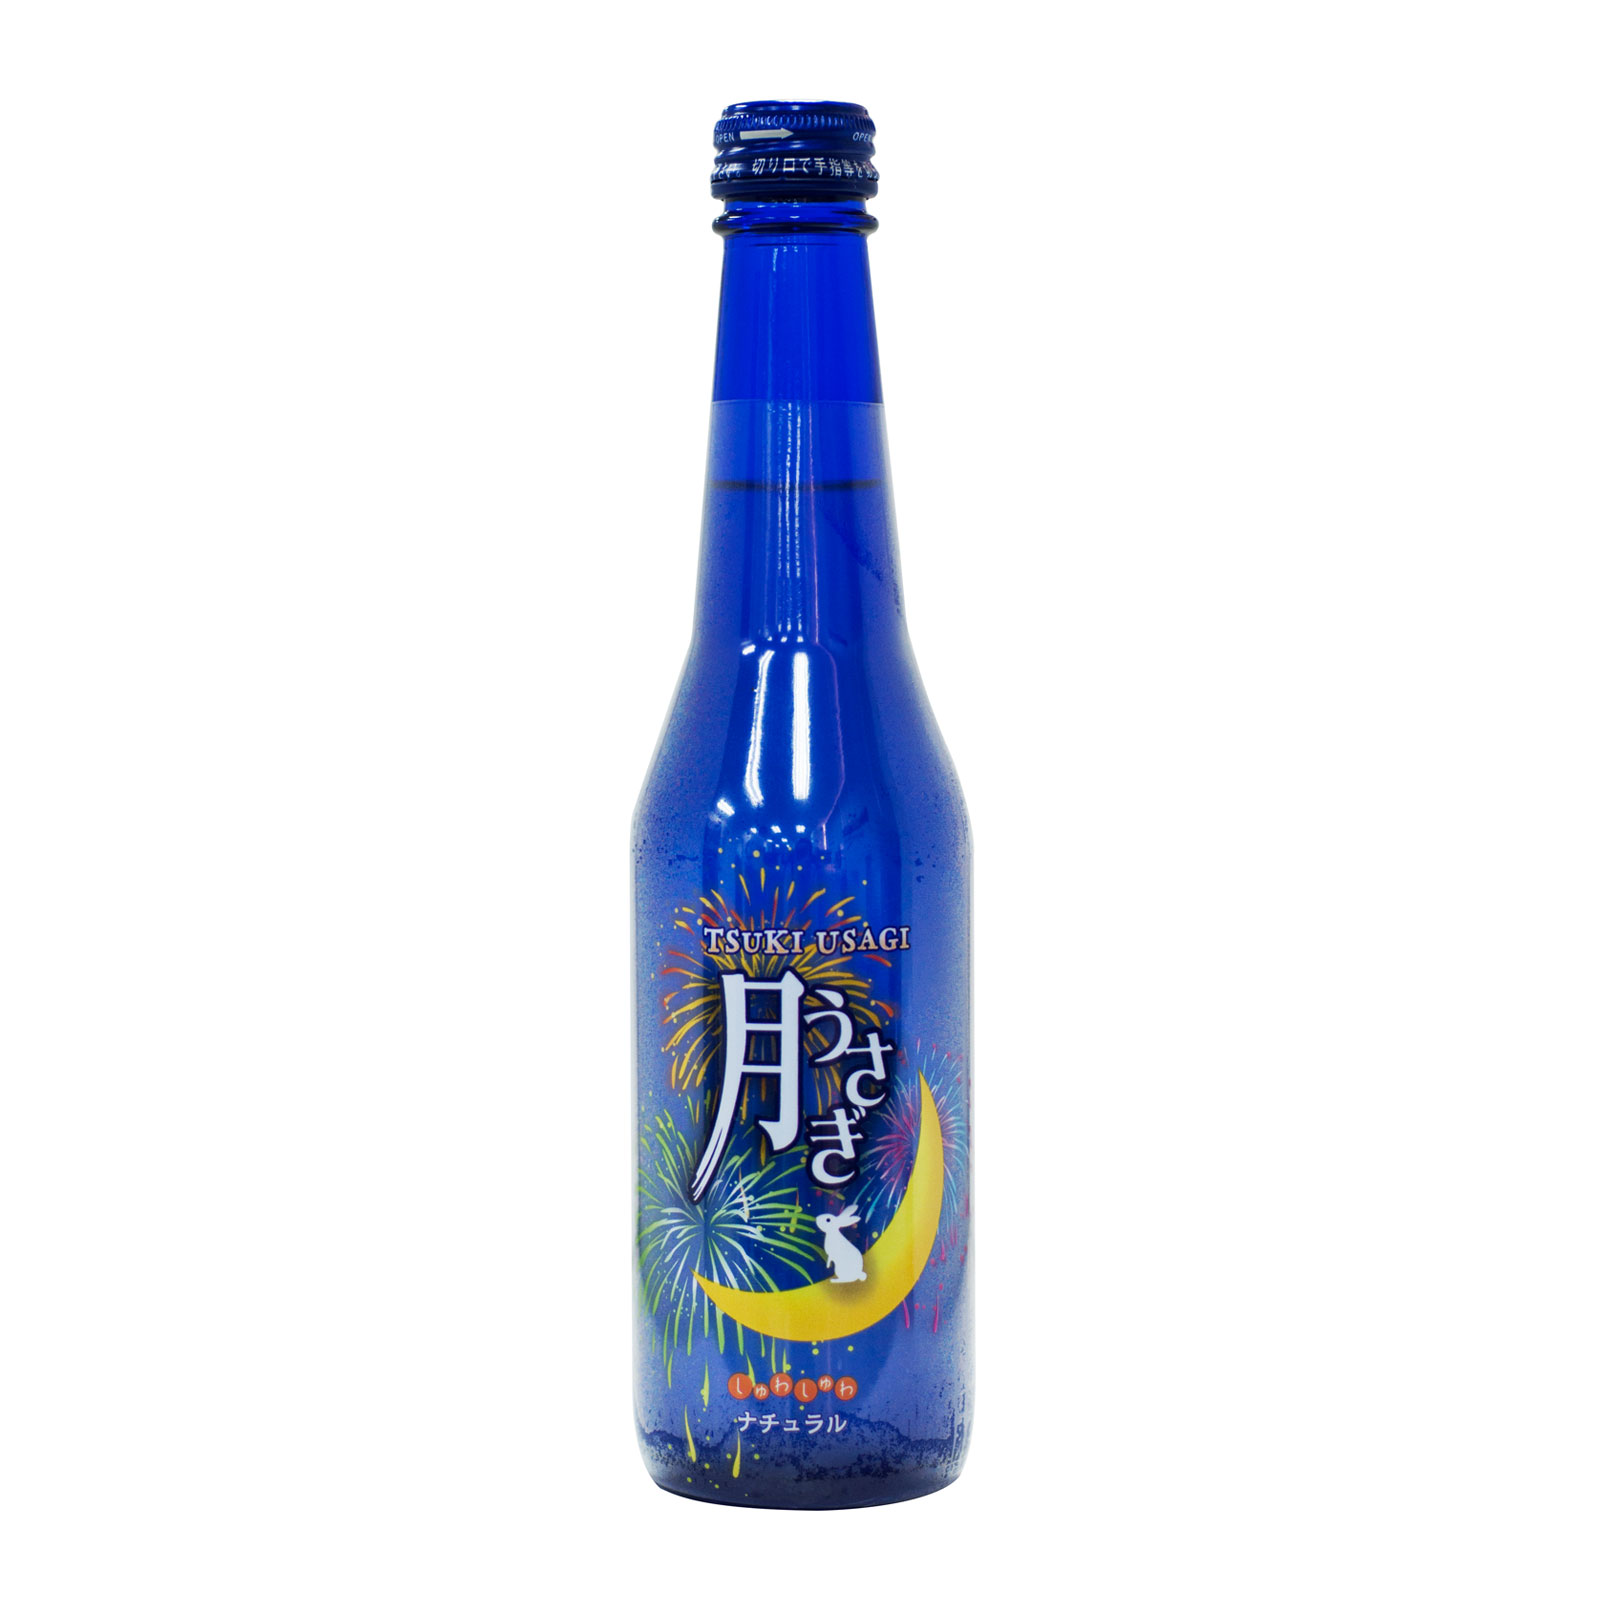 Umenoyado Sparkling Sake Tsukiusagu 6% 300ml